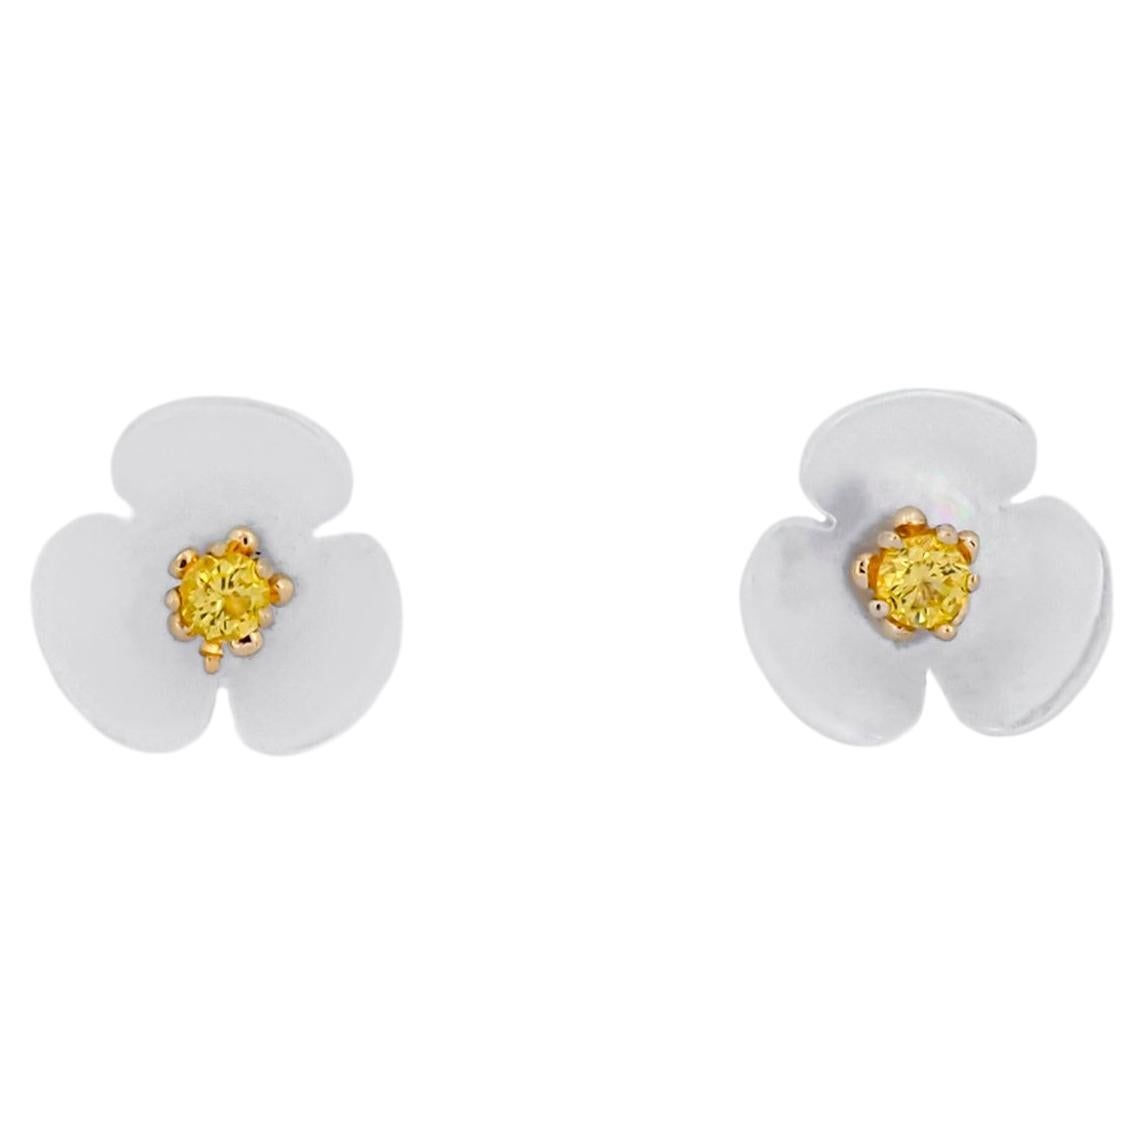 14k gold carved flower earrings studs. For Sale